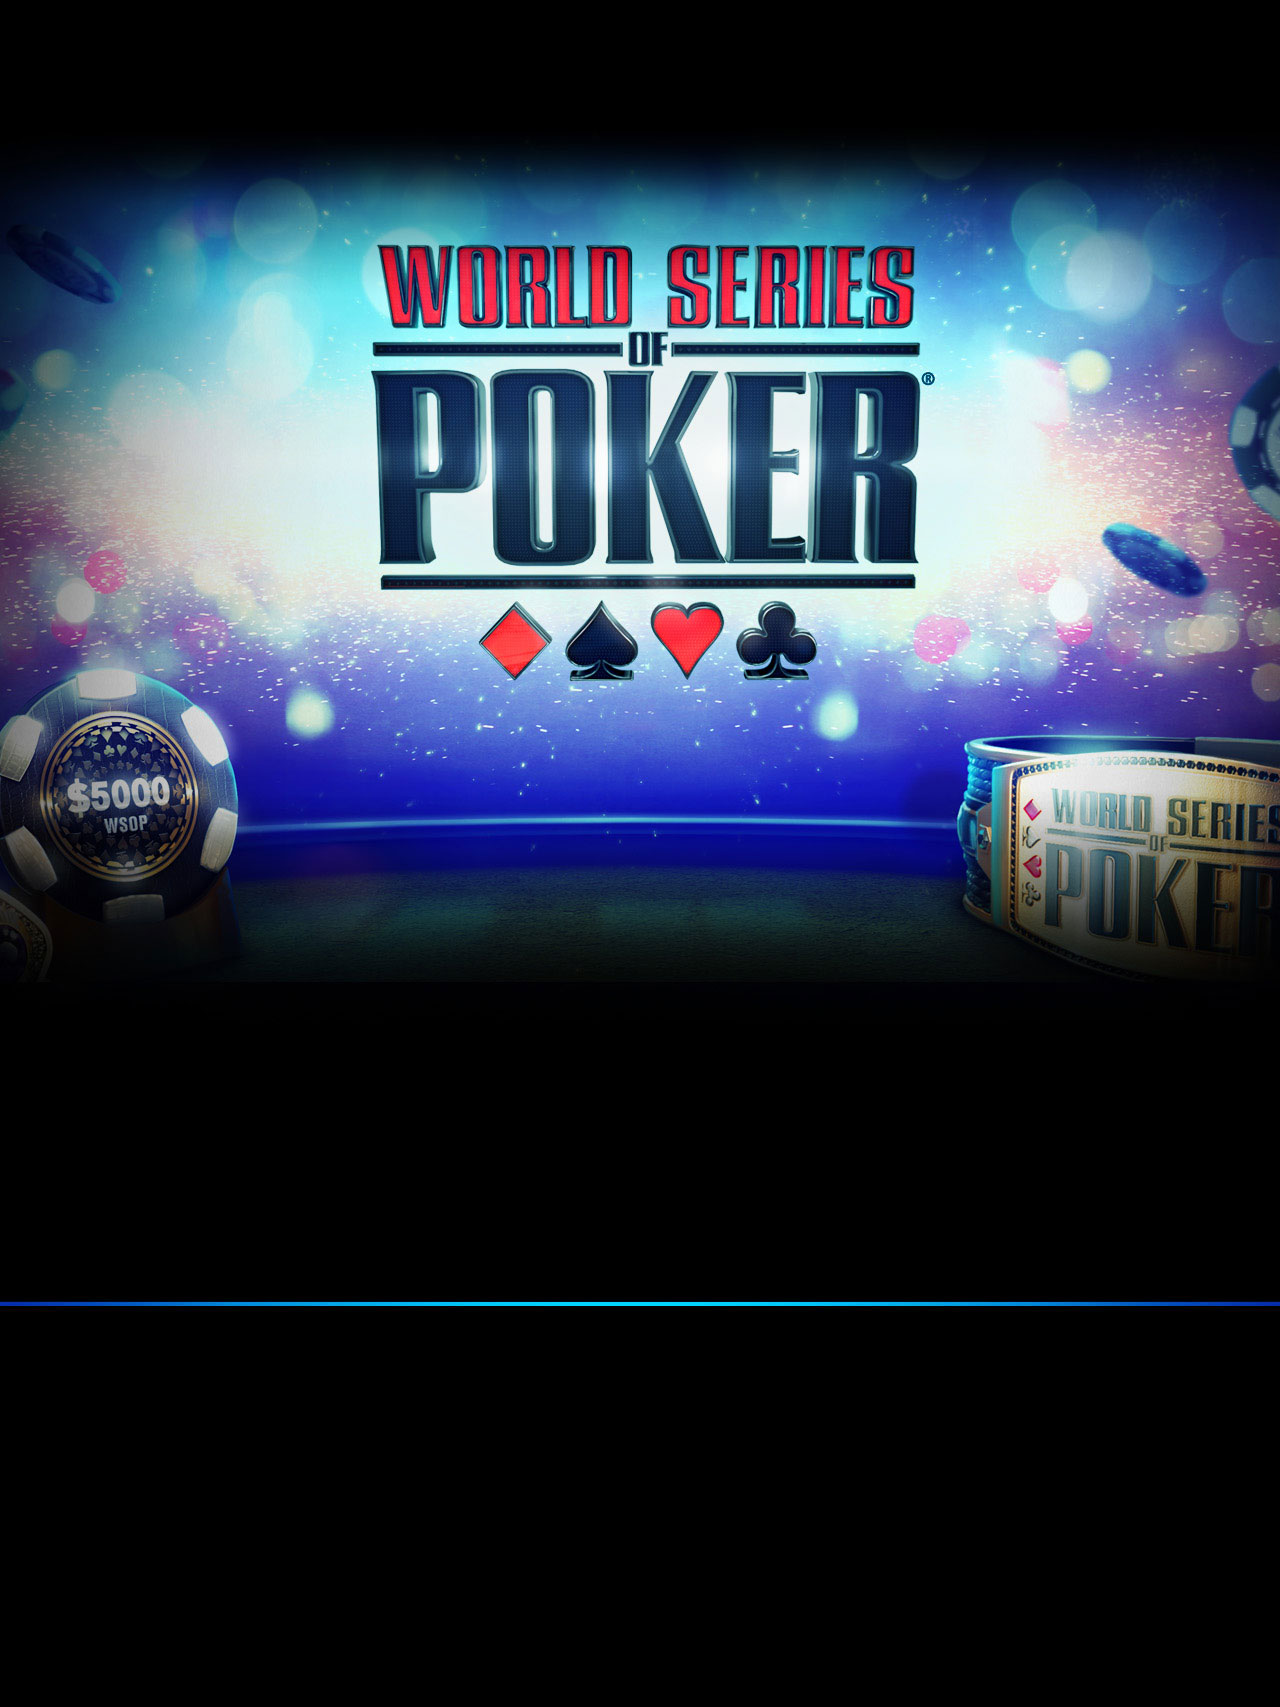 World Series of Poker - The Best Free Online Poker Game